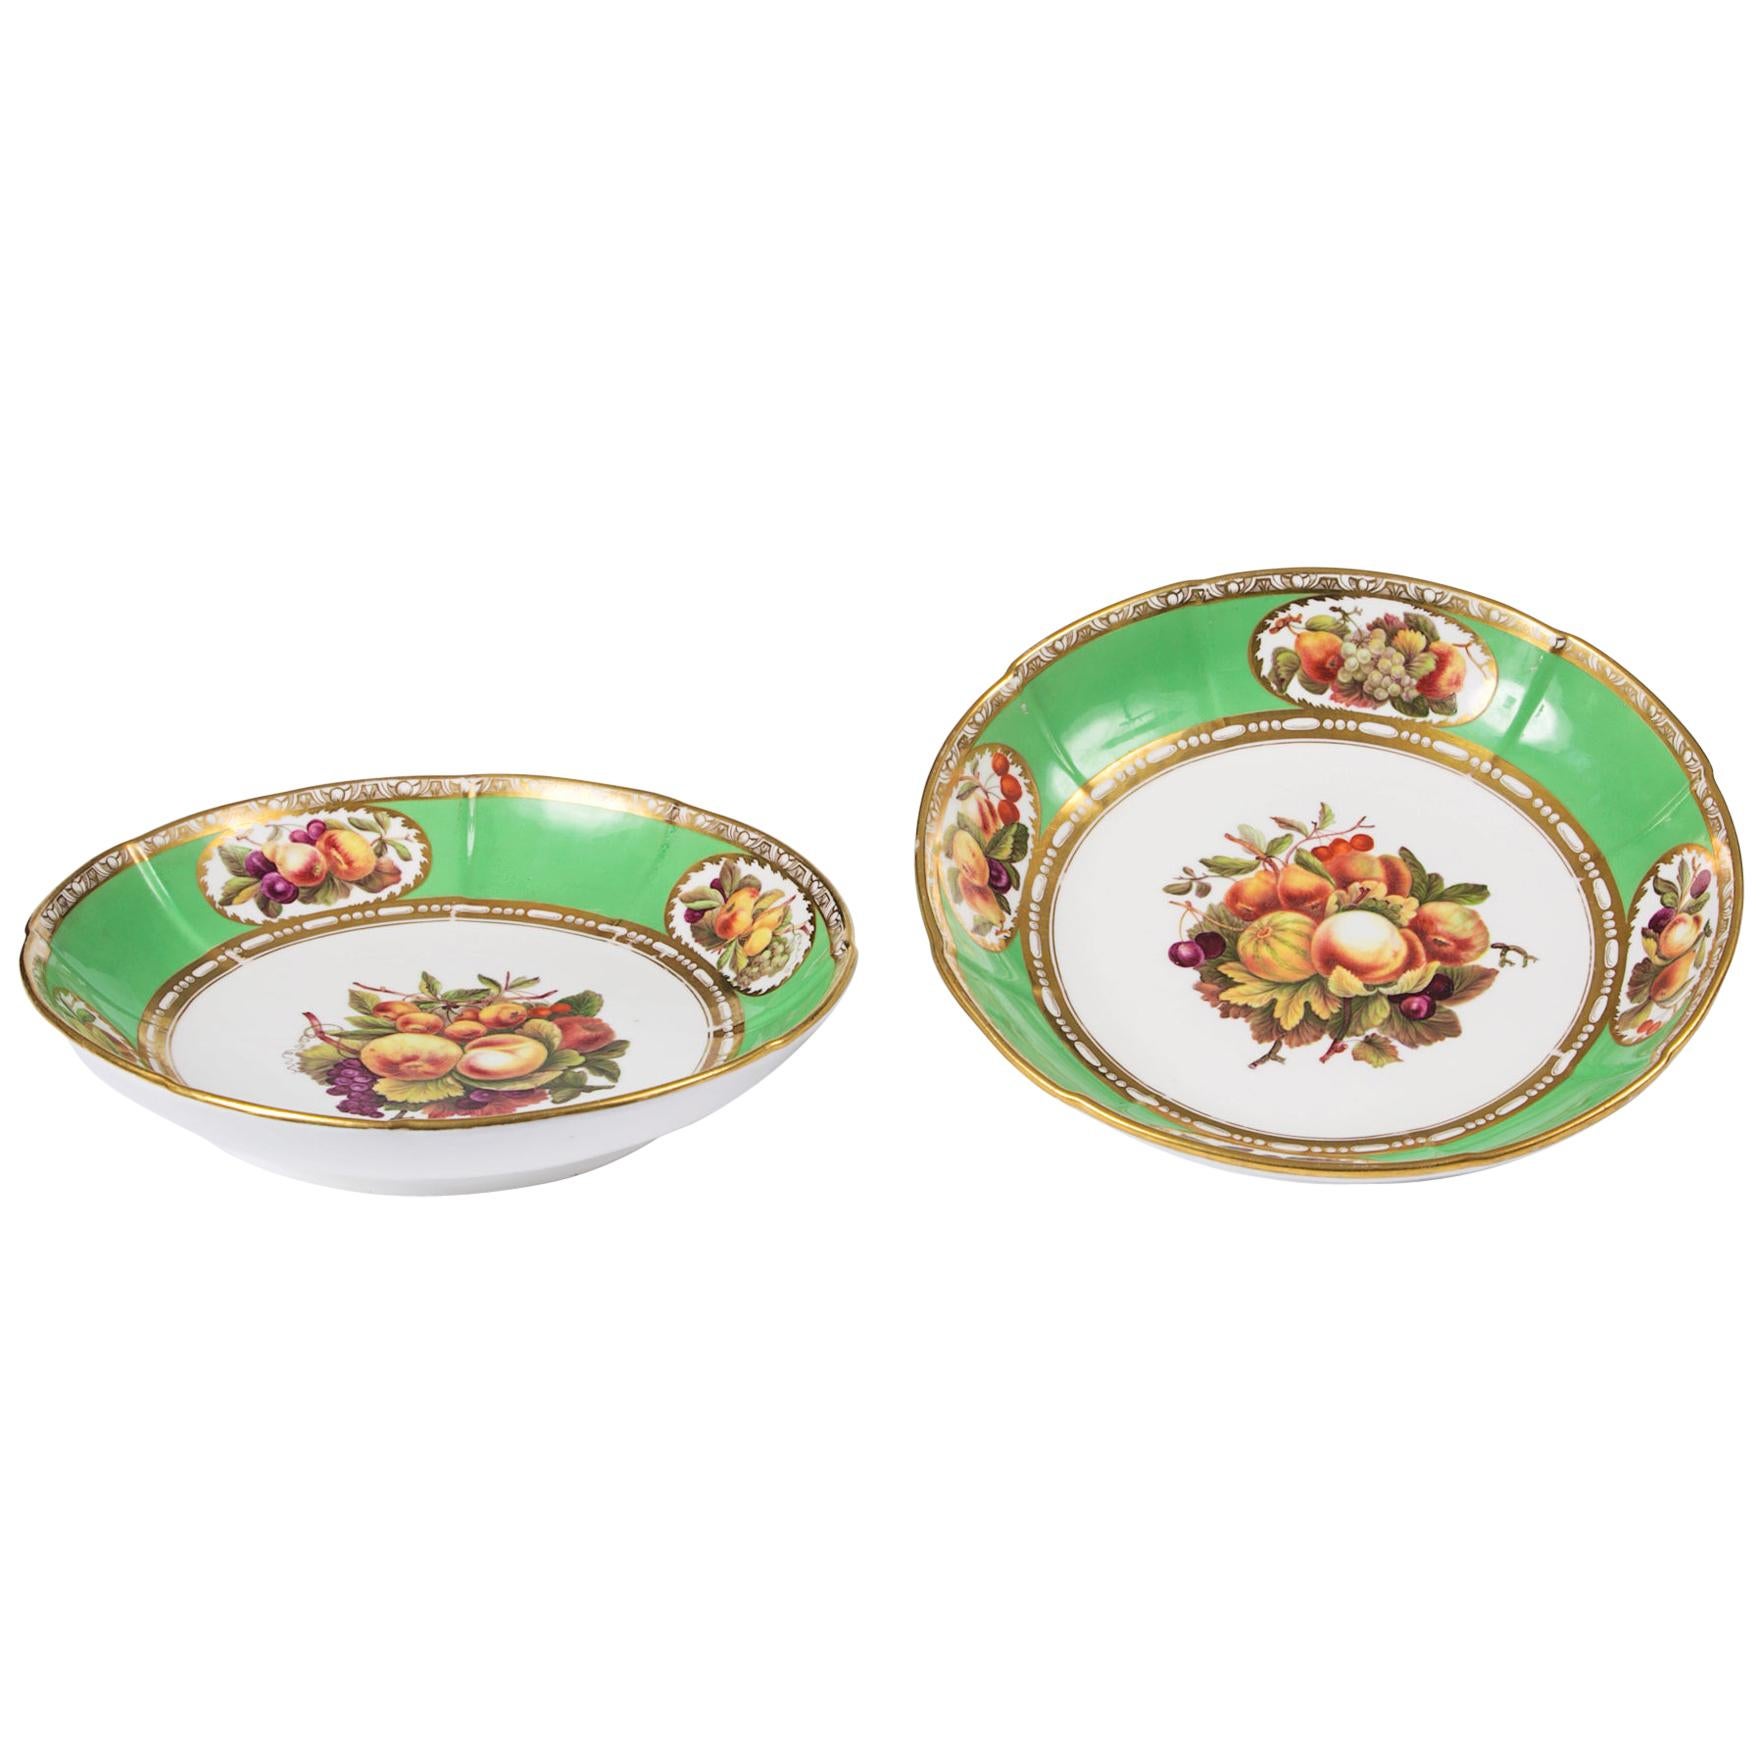 Early 19th Century Regency Spode Pair of Porcelain Dessert Dishes